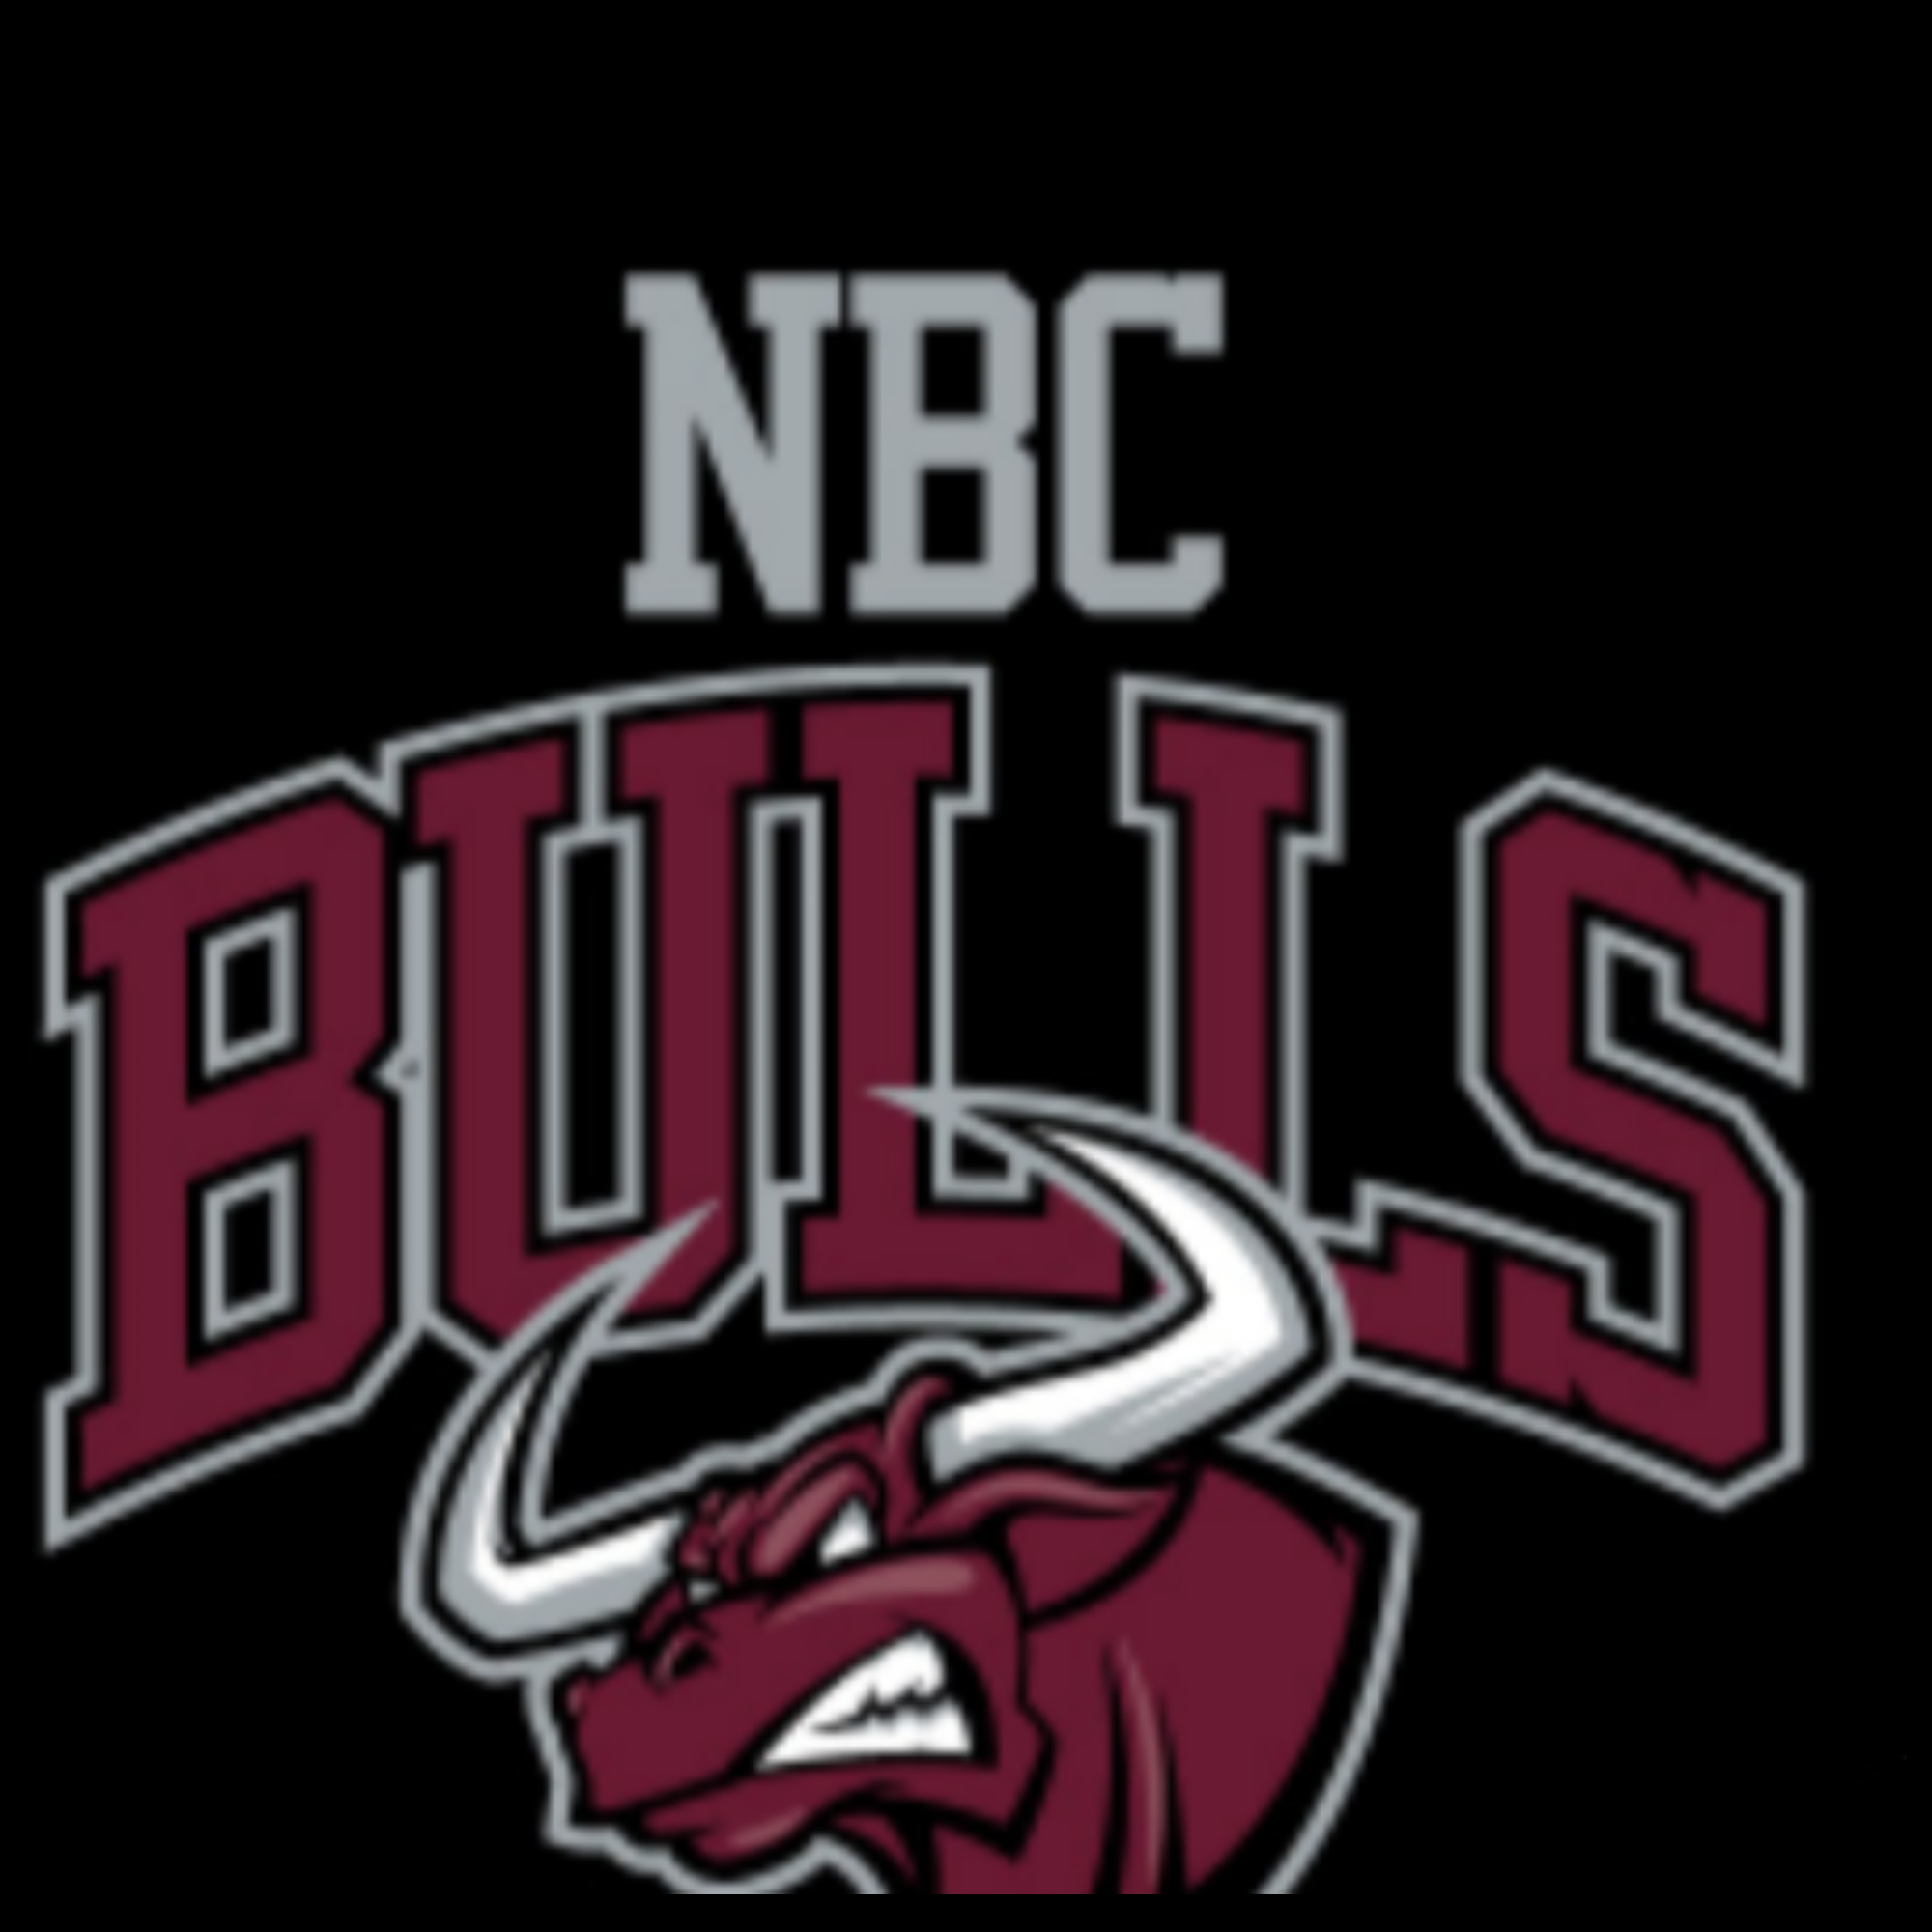 The official logo of NBC BULLS 2028